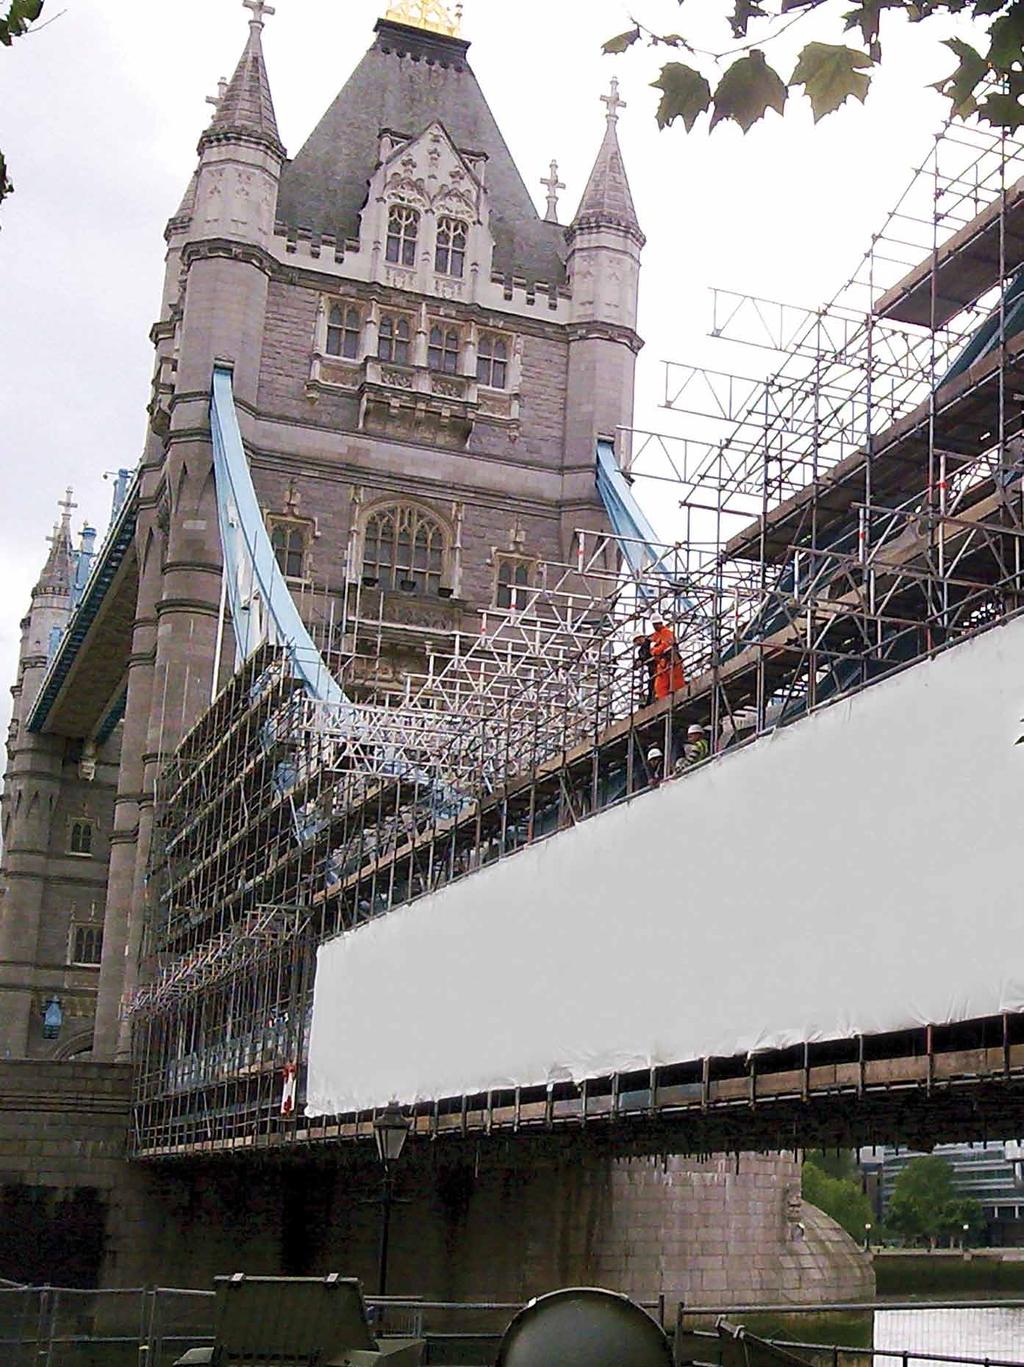 TOWER BRIDGE [LONDON] Project: SHRINK WRAP Encapsulation of Tower Bridge Purpose: Environmental containment protecting